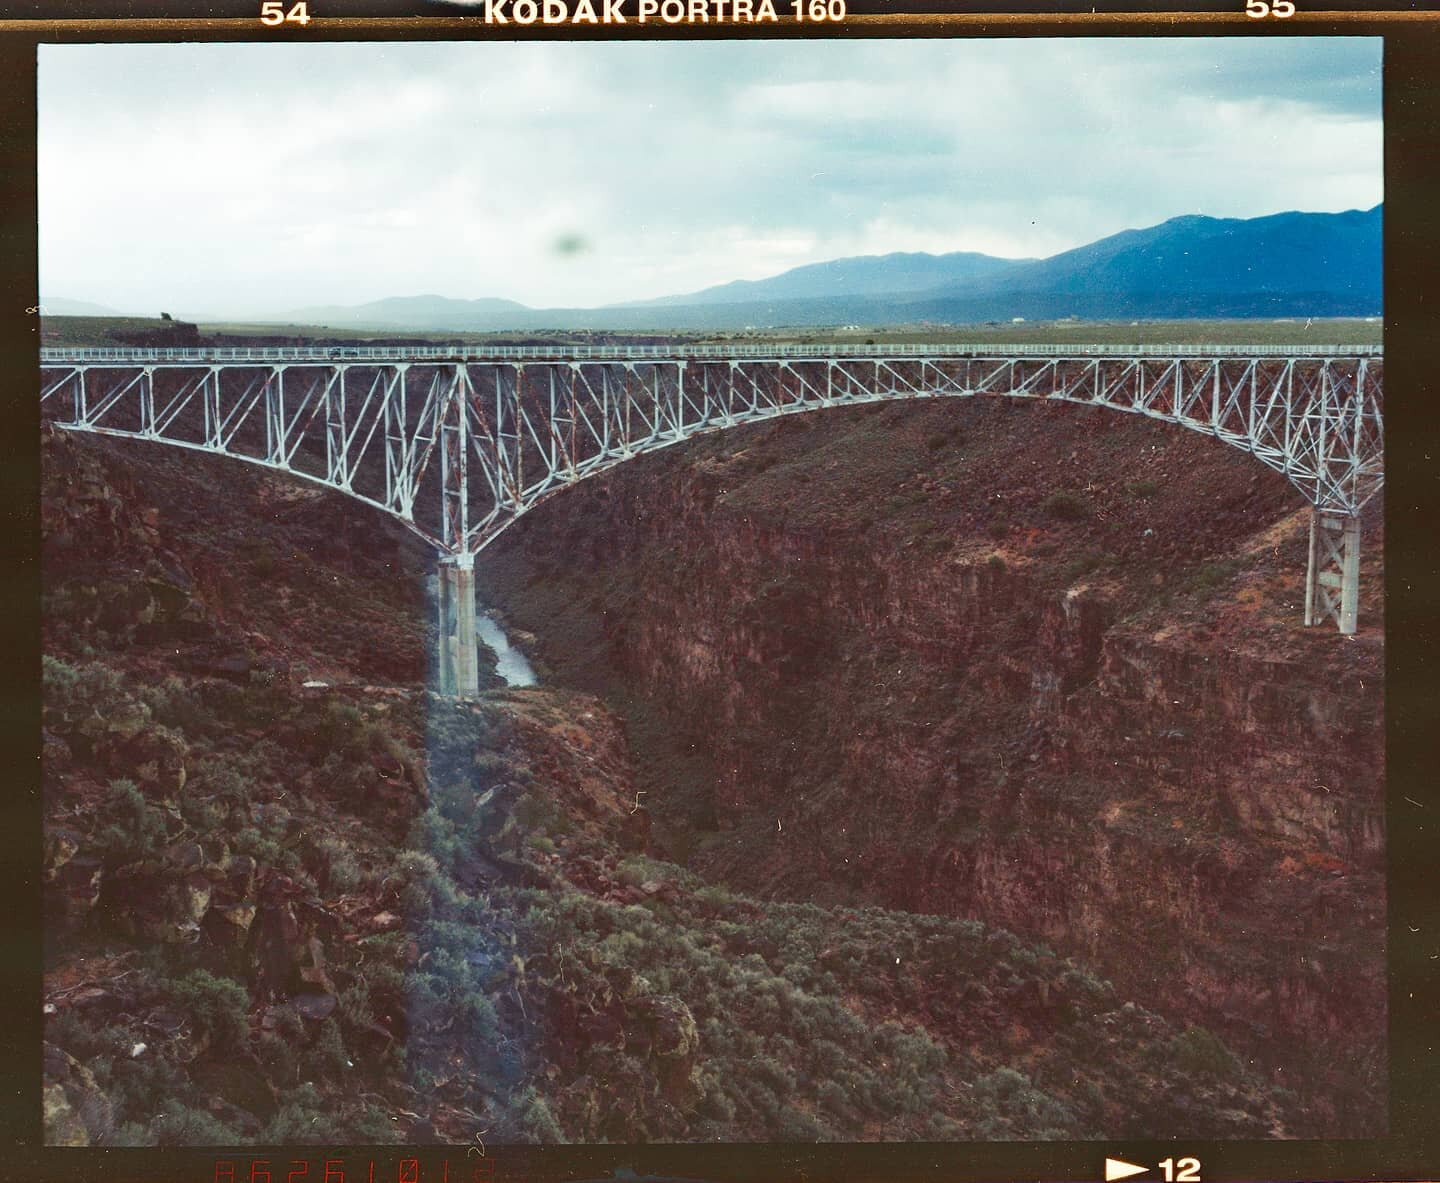 The bridge over the Rio Grande, shot on my Medium Format Mamiya RB67.